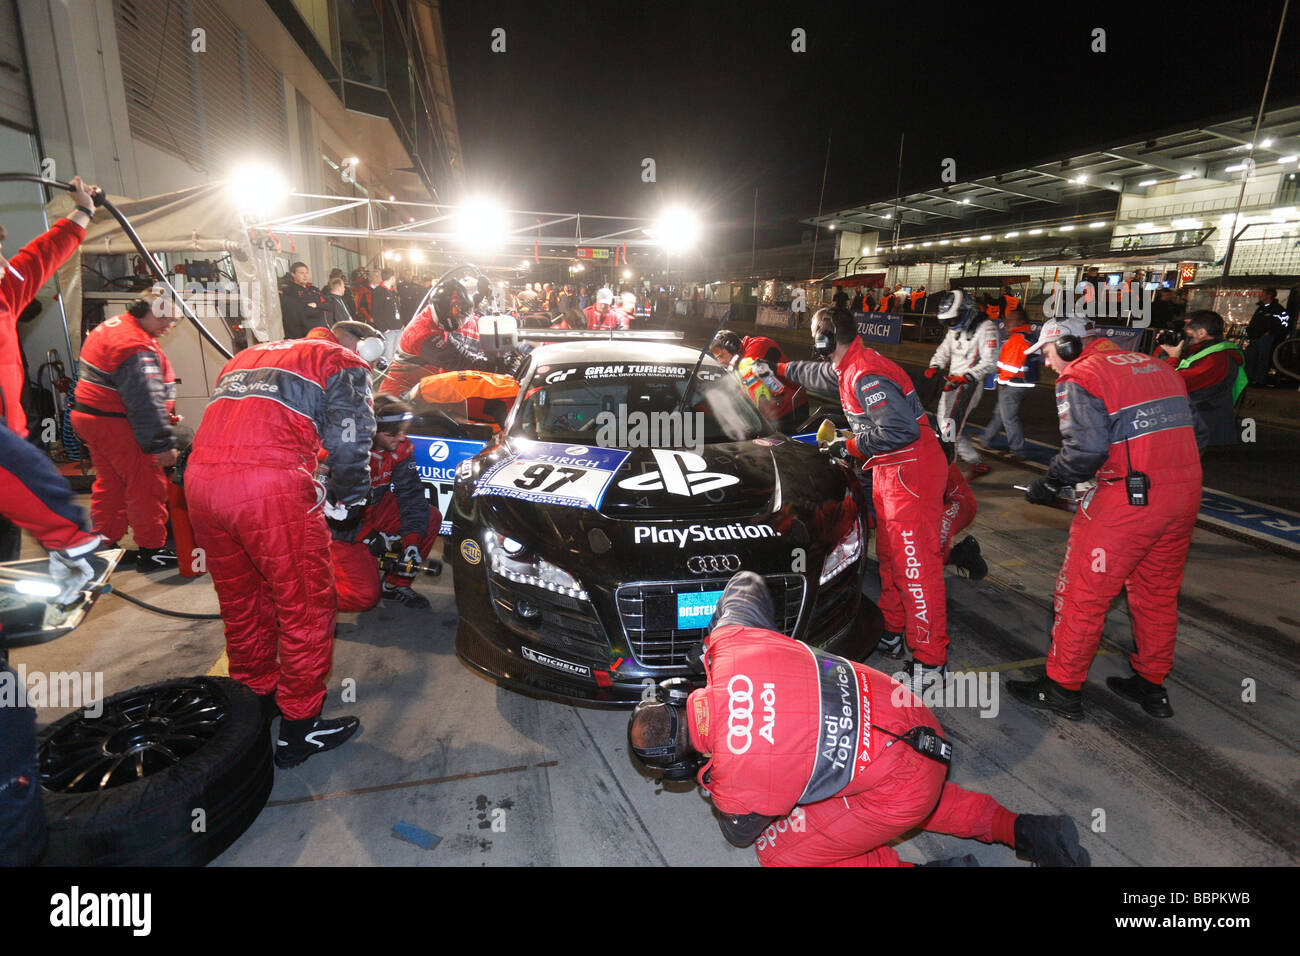 24 ore di corsa al Nurburgring race track, le Audi R8 del Team Abt Sportsline Abt, Christian D - Kempten Hemroulle, Jean-Francois Foto Stock